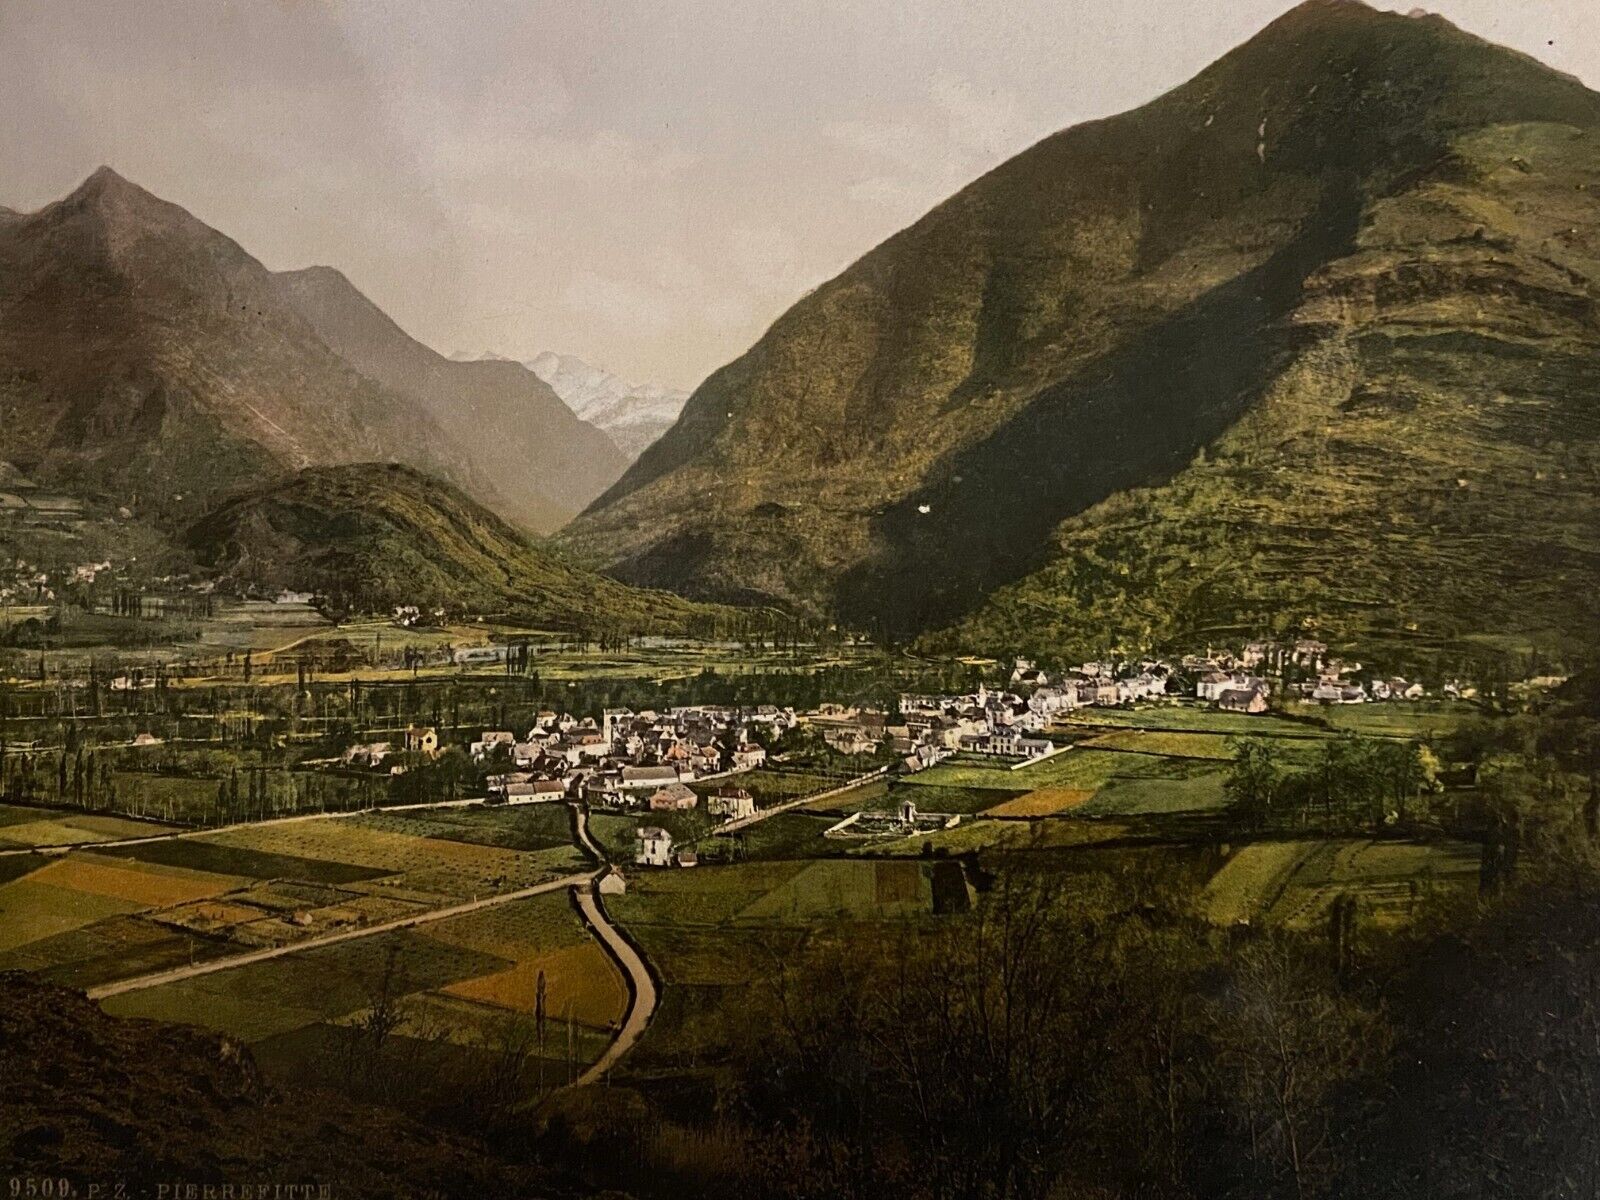 Photochrome PZ - PIERREFITTE - Canton of Bern - Switzerland - No. 9509 - circa 1896